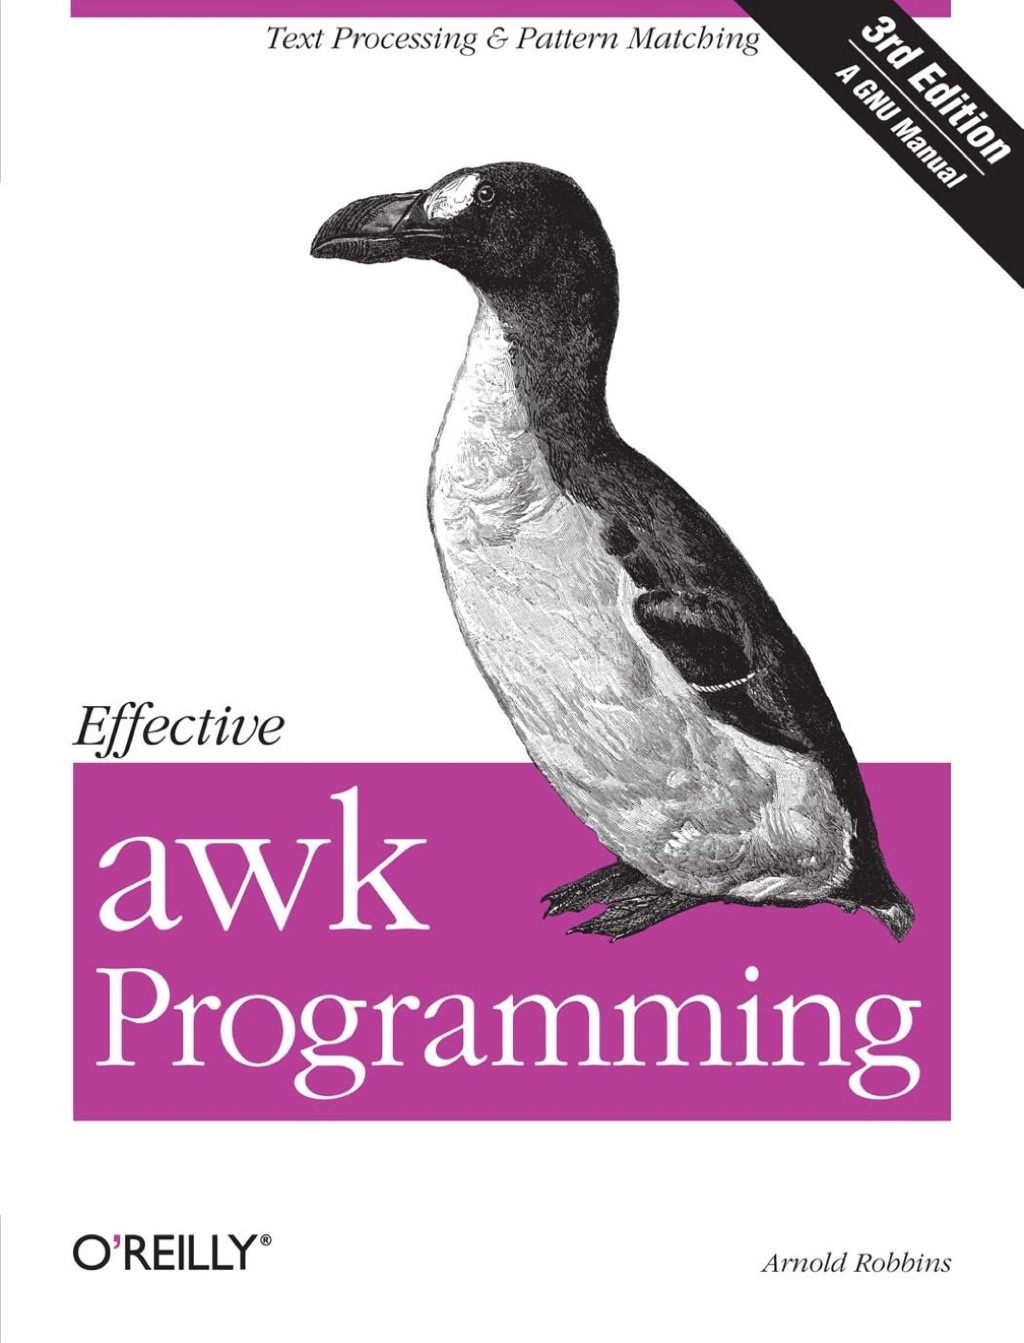 Effective awk Programming - 3rd Edition (eBook Rental)